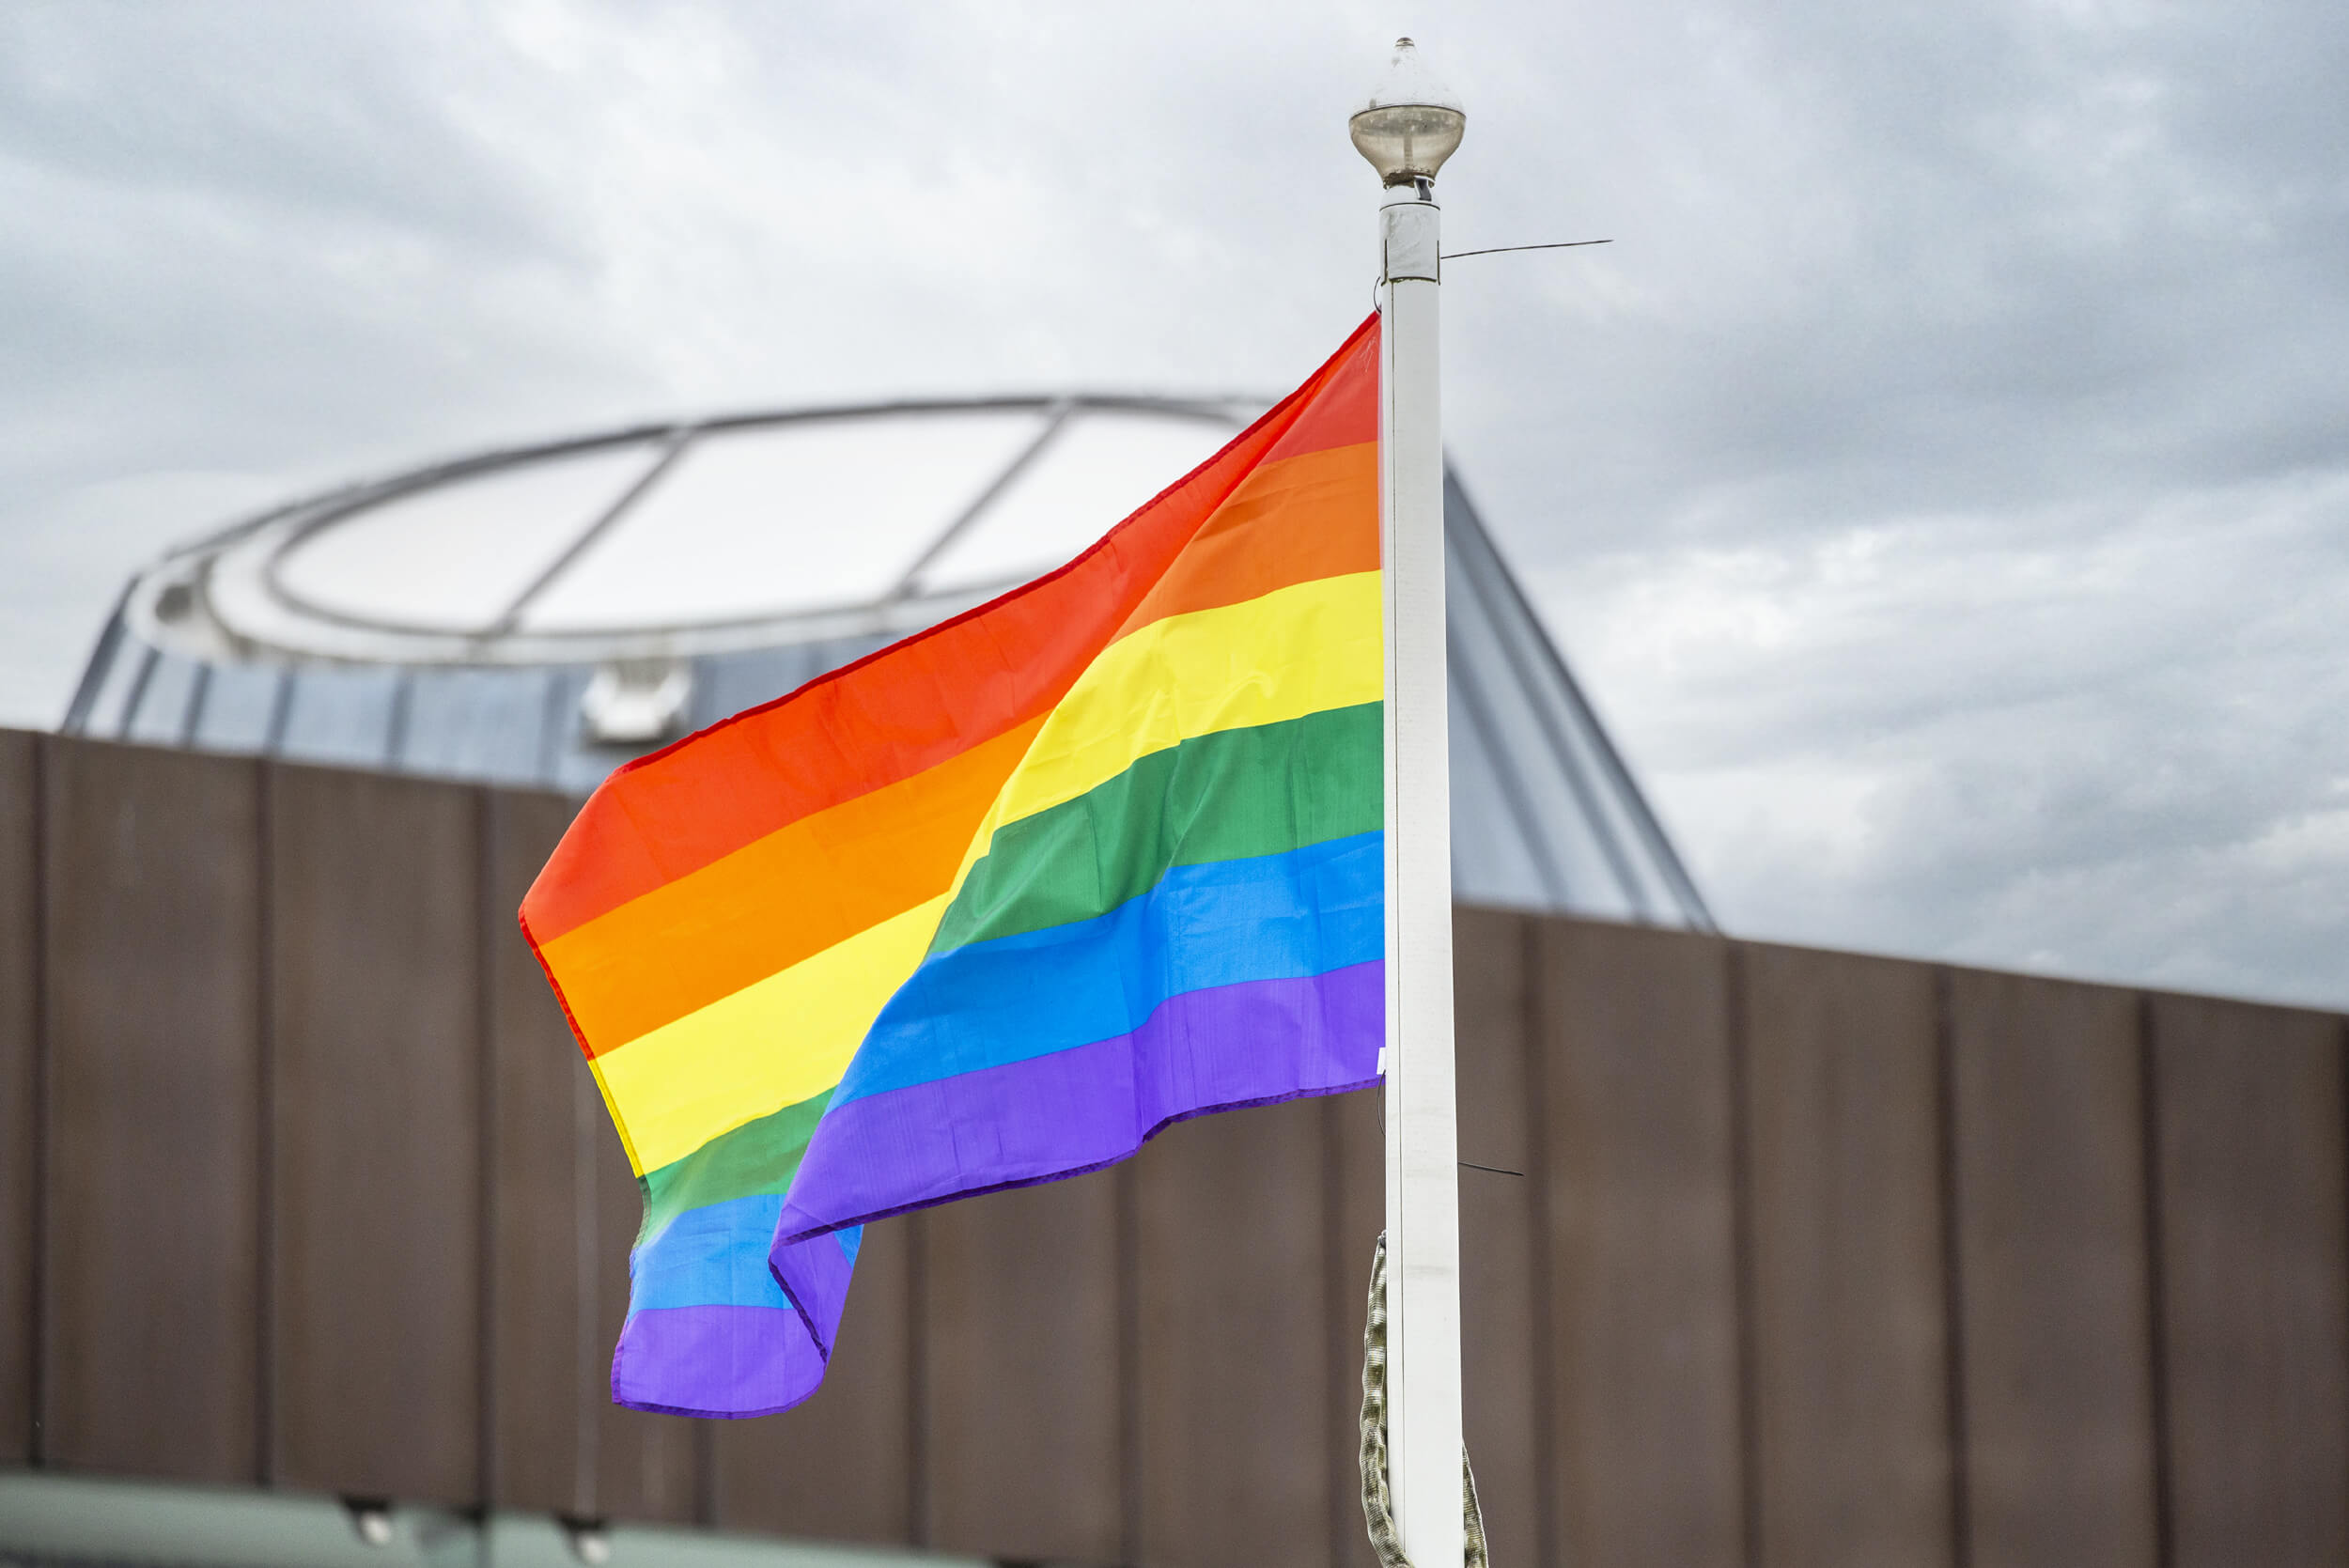 Rainbow Flag raised at County Hall